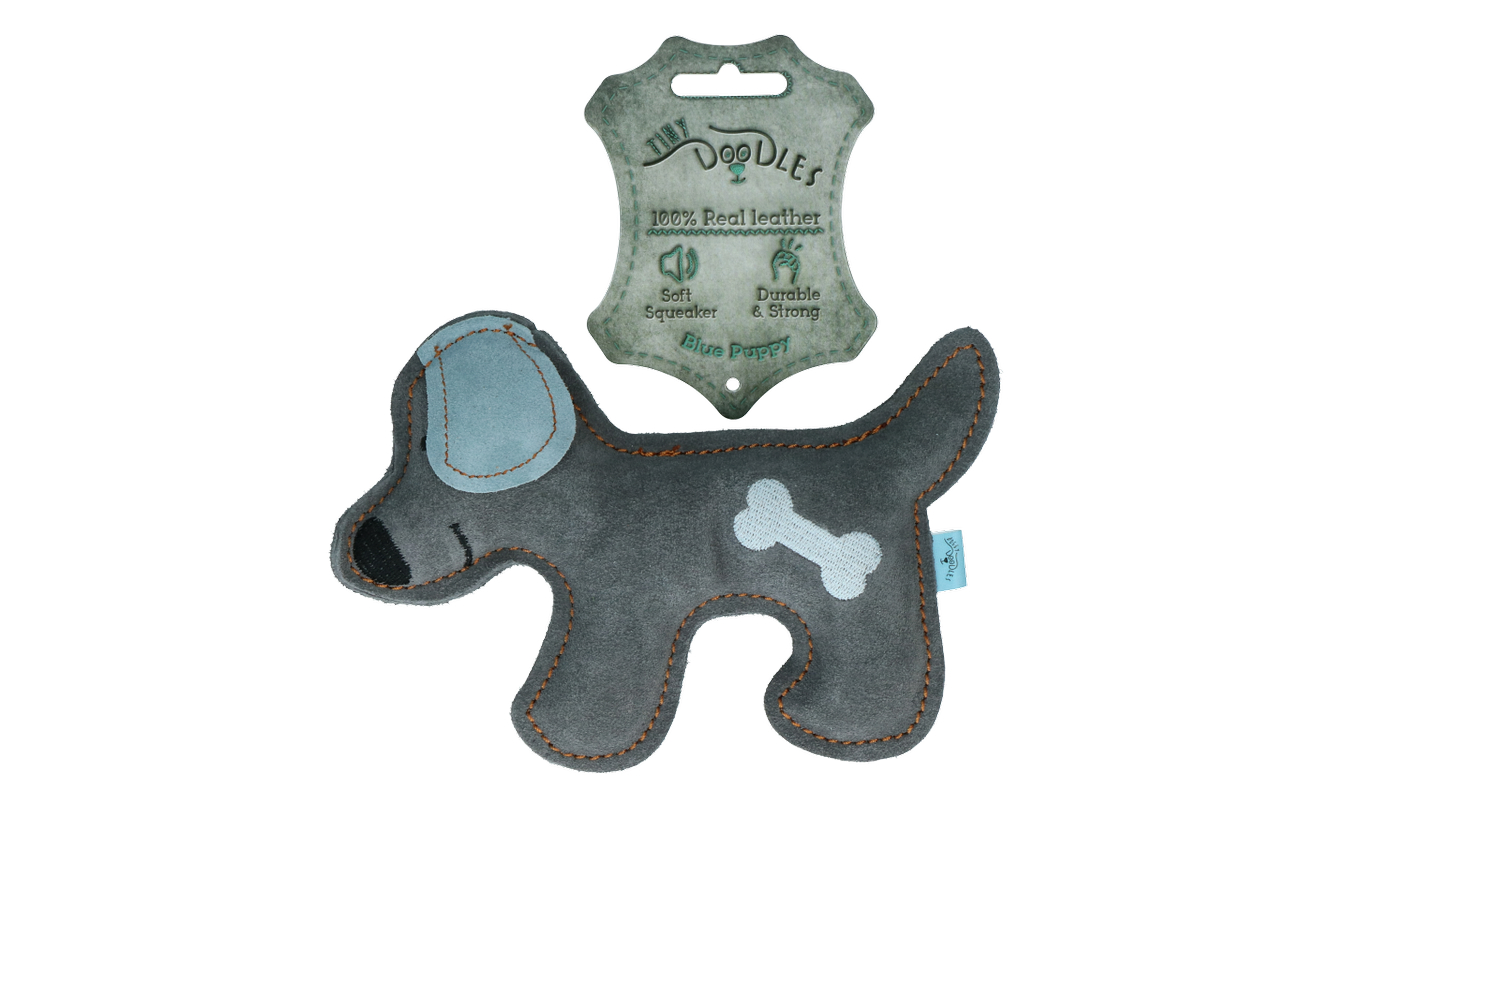 Doggy-Doodles-Hundespielzeug-Puppy-Grau-Blau-Etikett